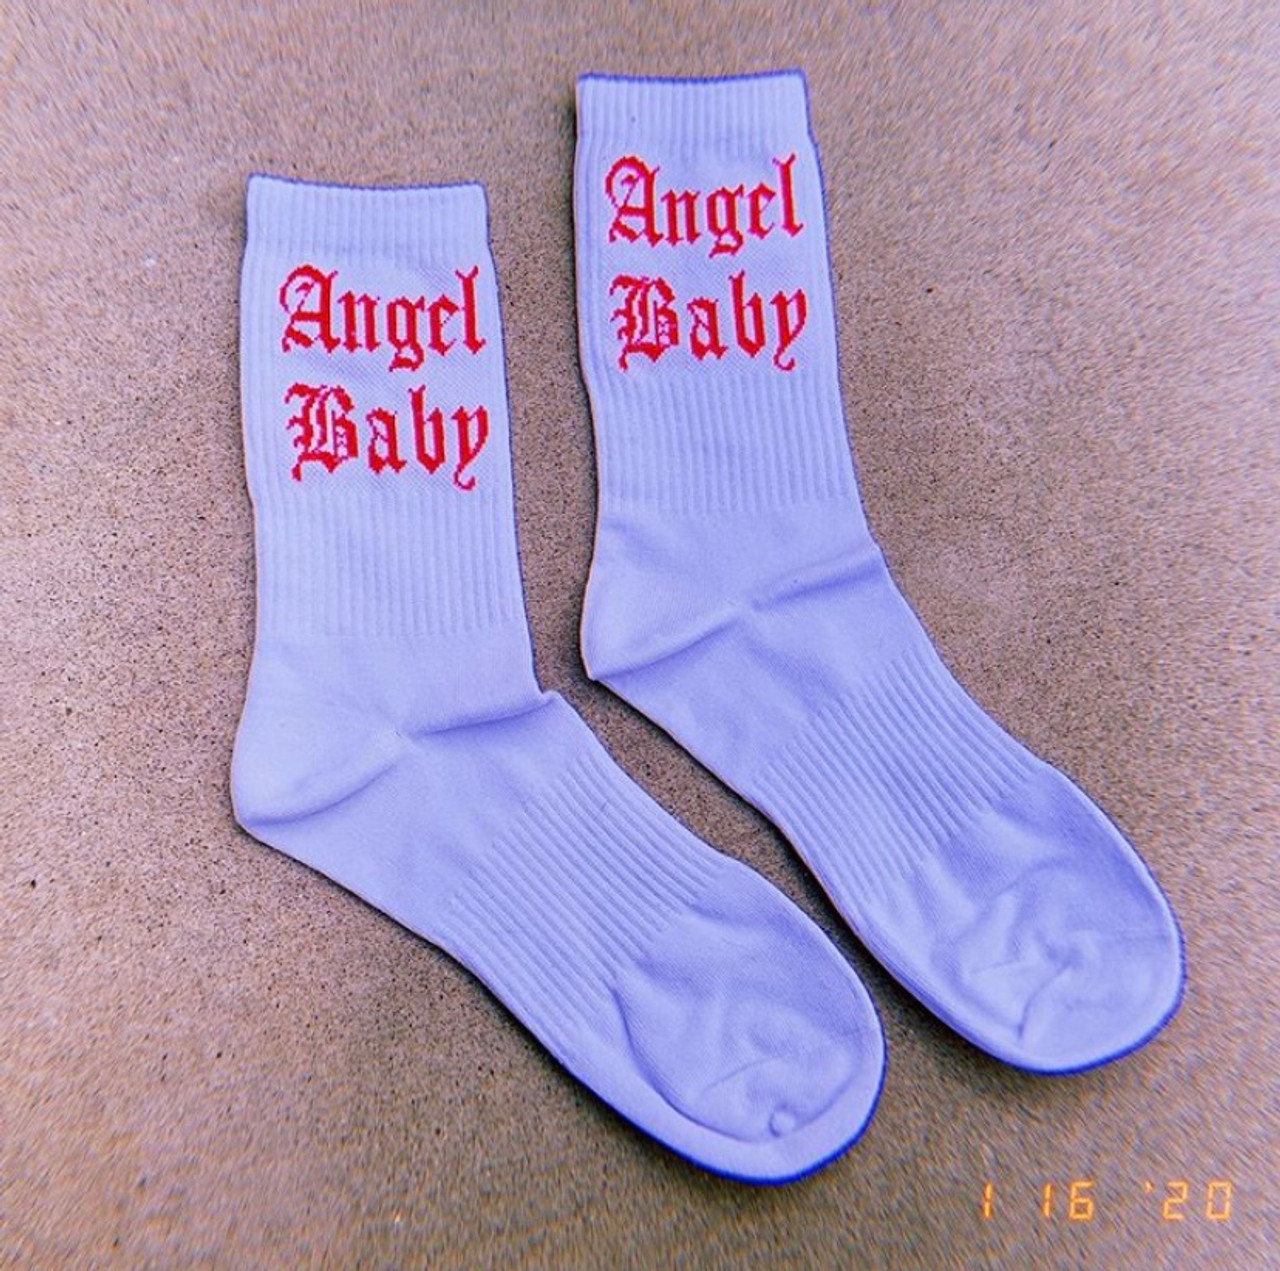 neon baby socks